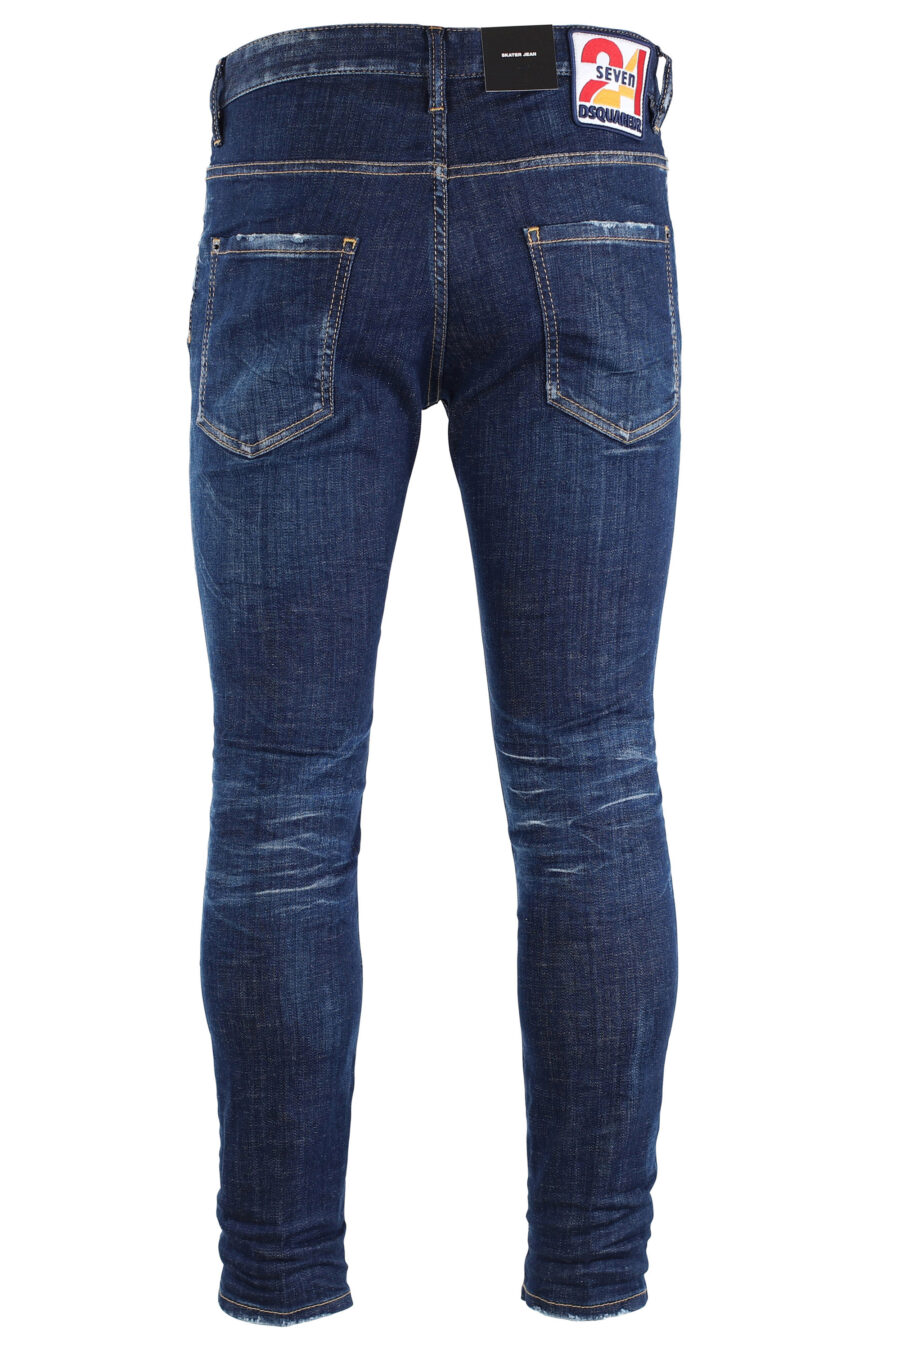 Pantalon en denim "24 seven skater jean" bleu semi-usé - IMG 1618